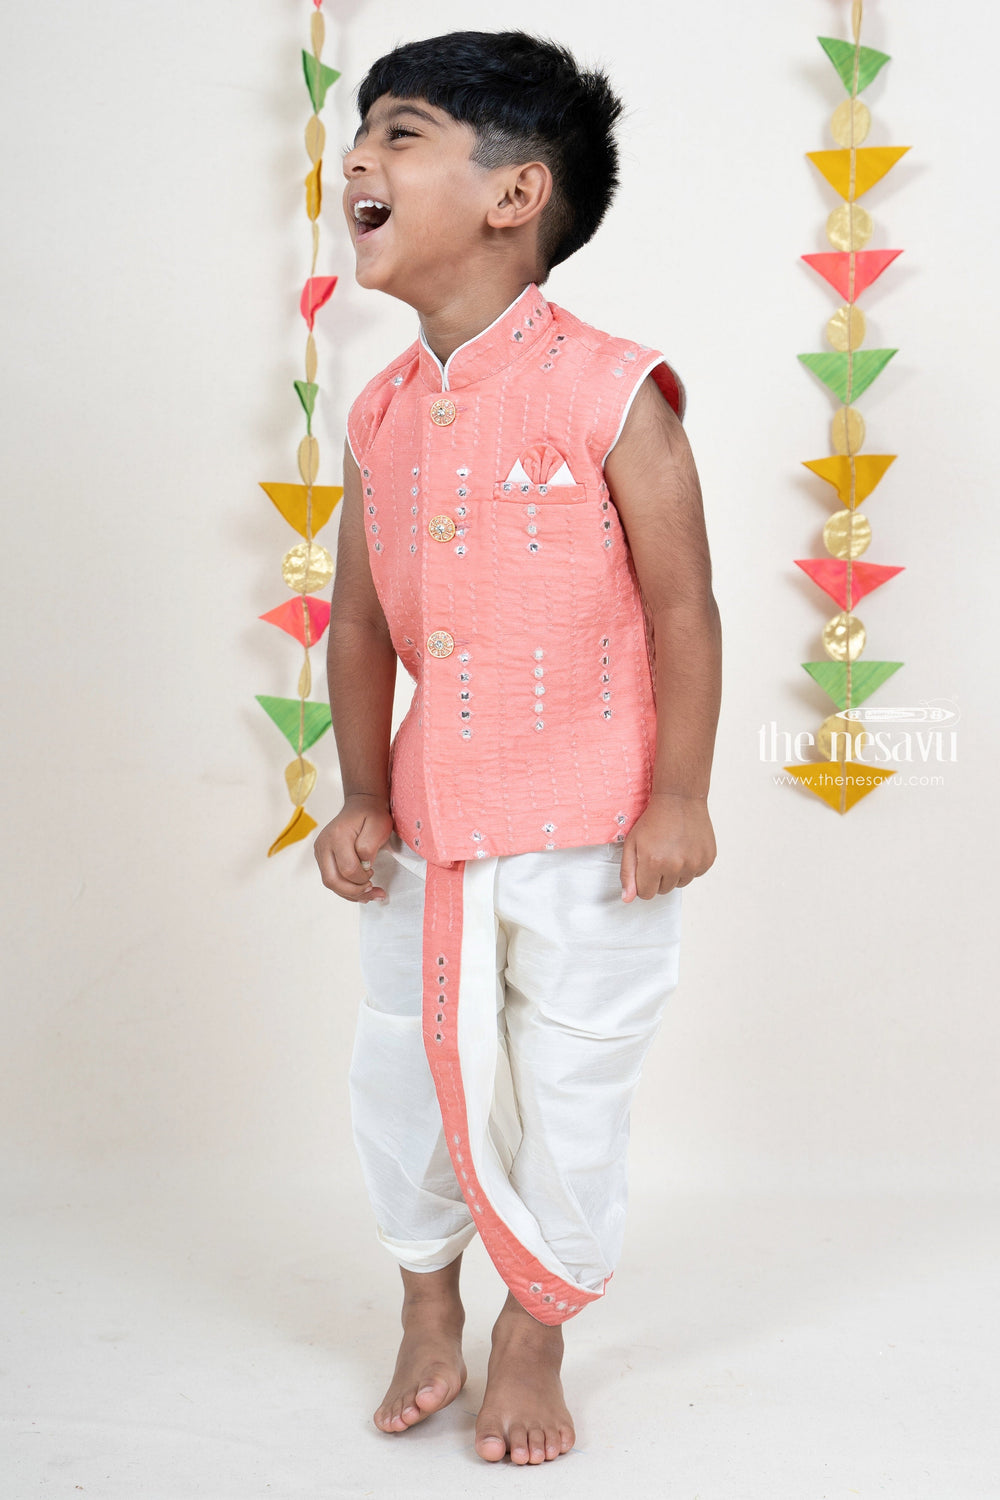 The Nesavu Ethnic Sets Punch Pink Embroidery Dhoti Pant Festive Wear Kurta For Baby Boys psr silks Nesavu